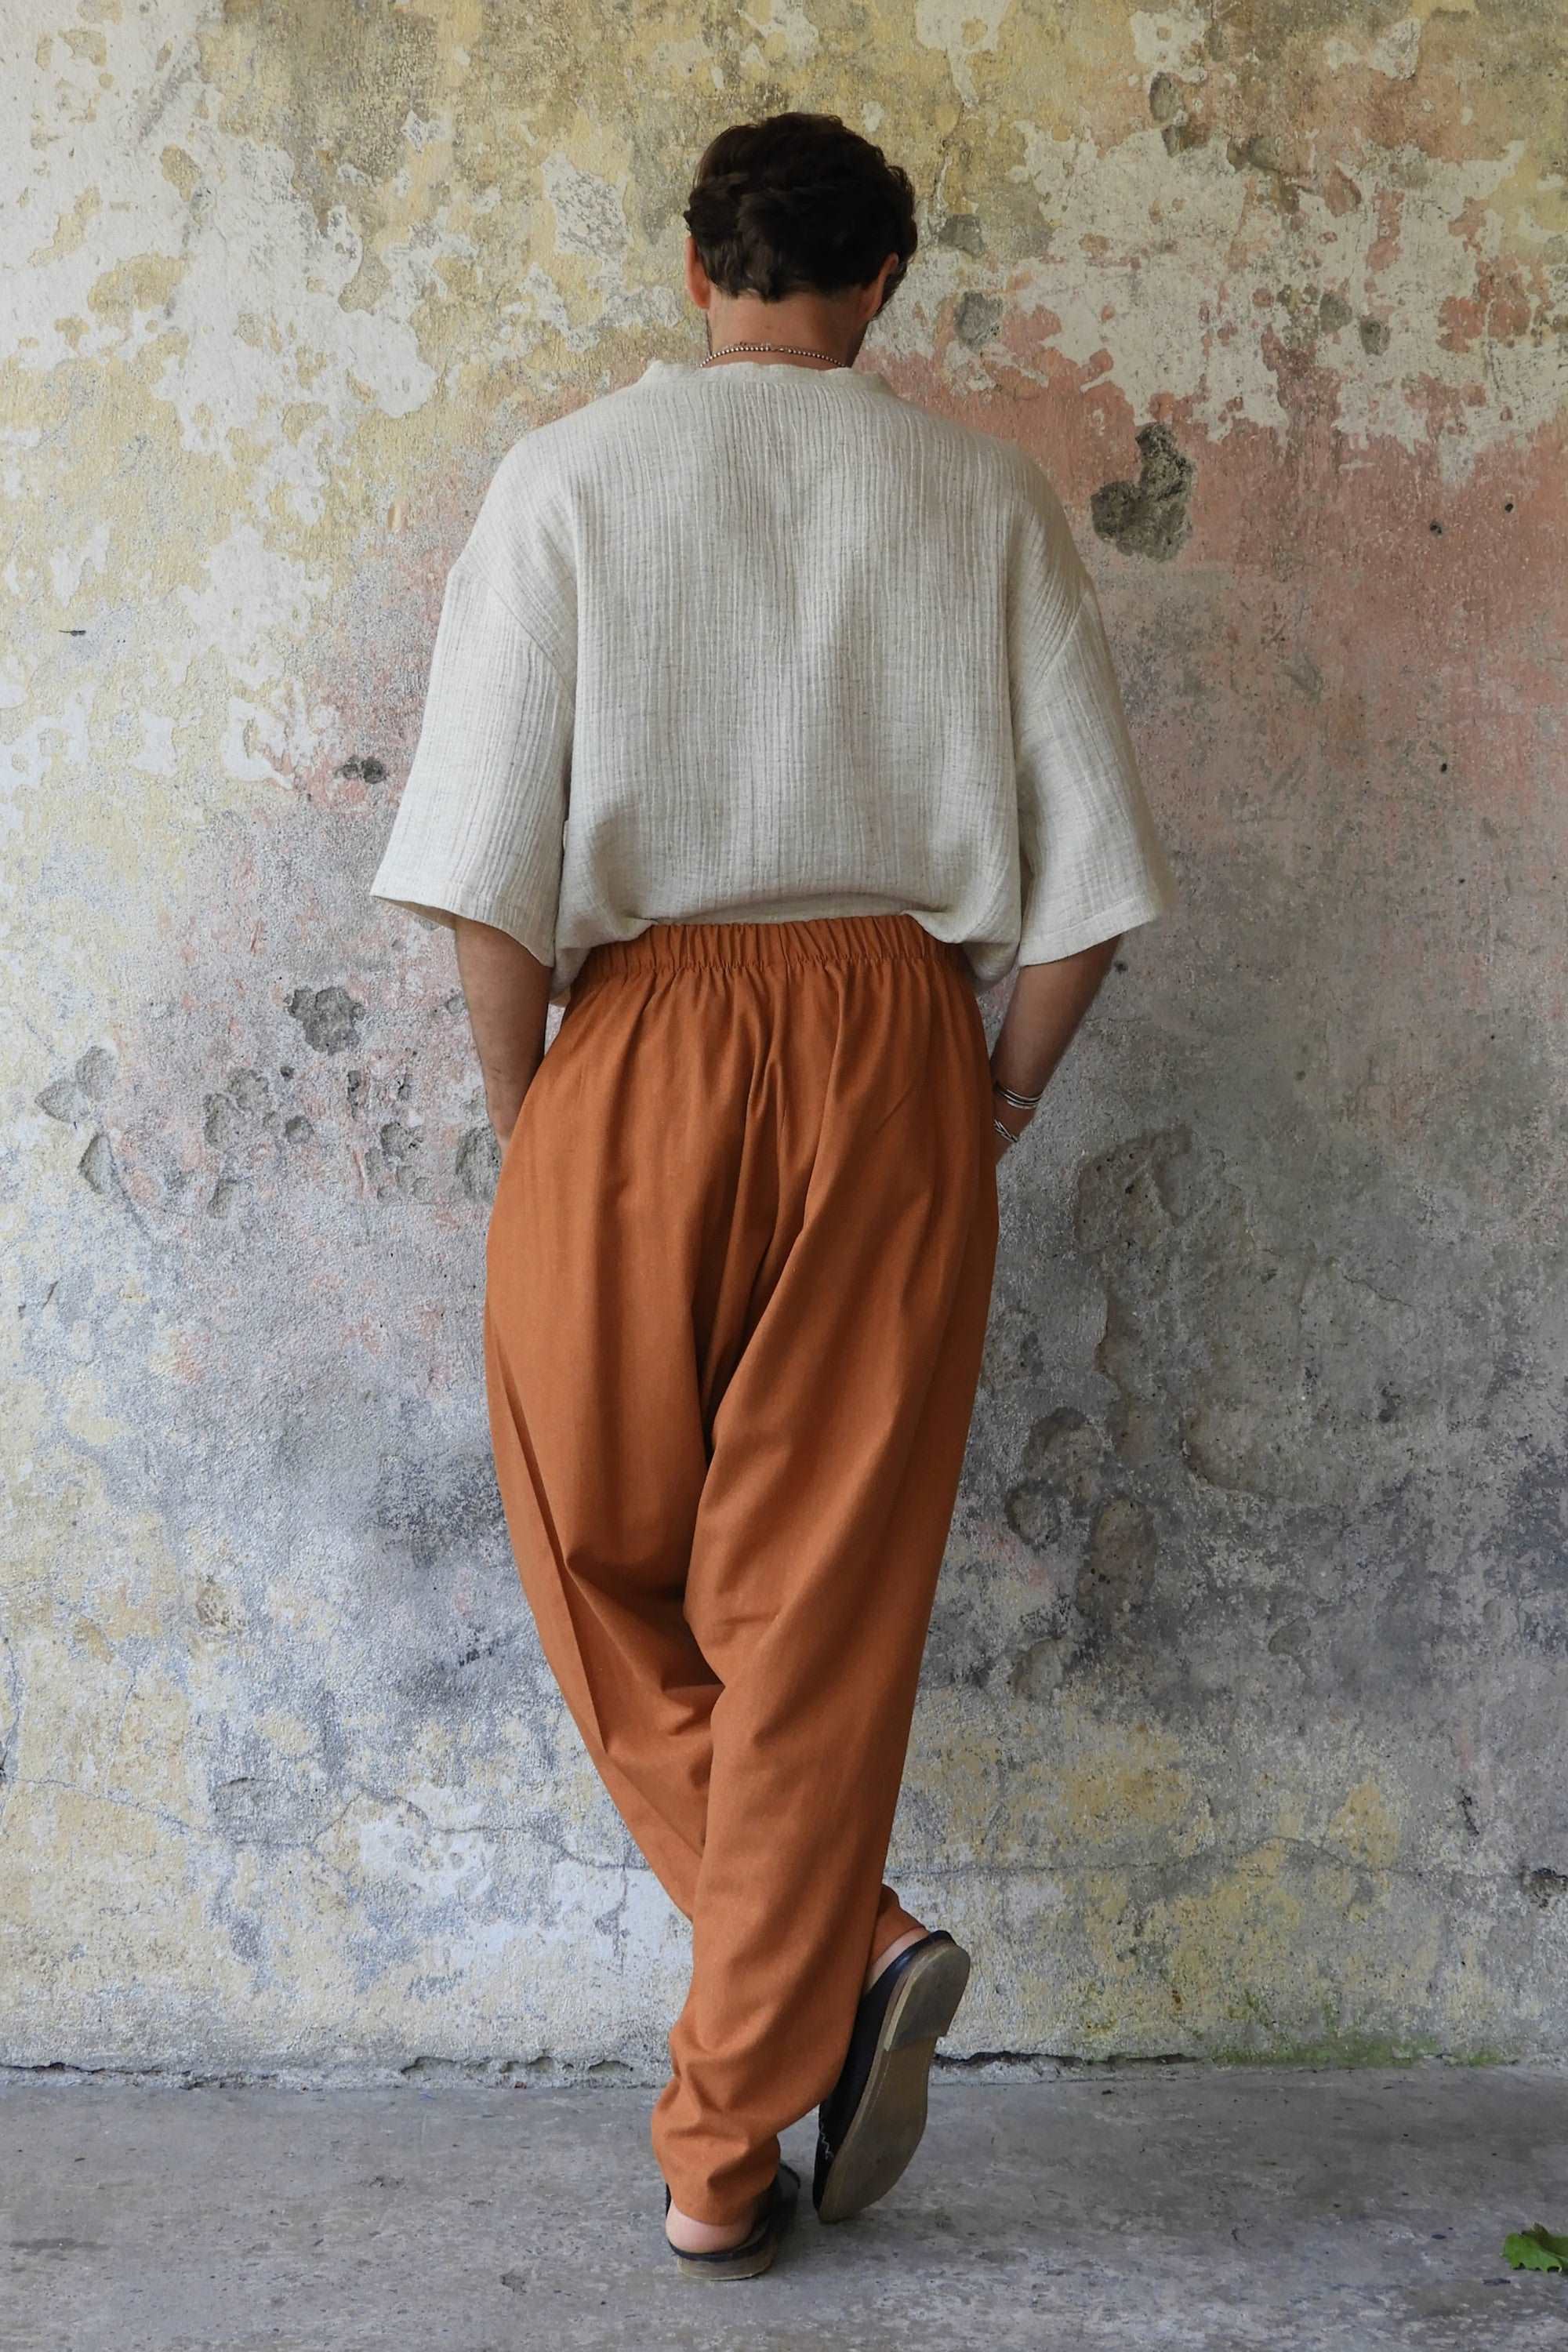 MOON Men's Linen Blend Harem Pants (Windsor Tan, Burnt Orange)